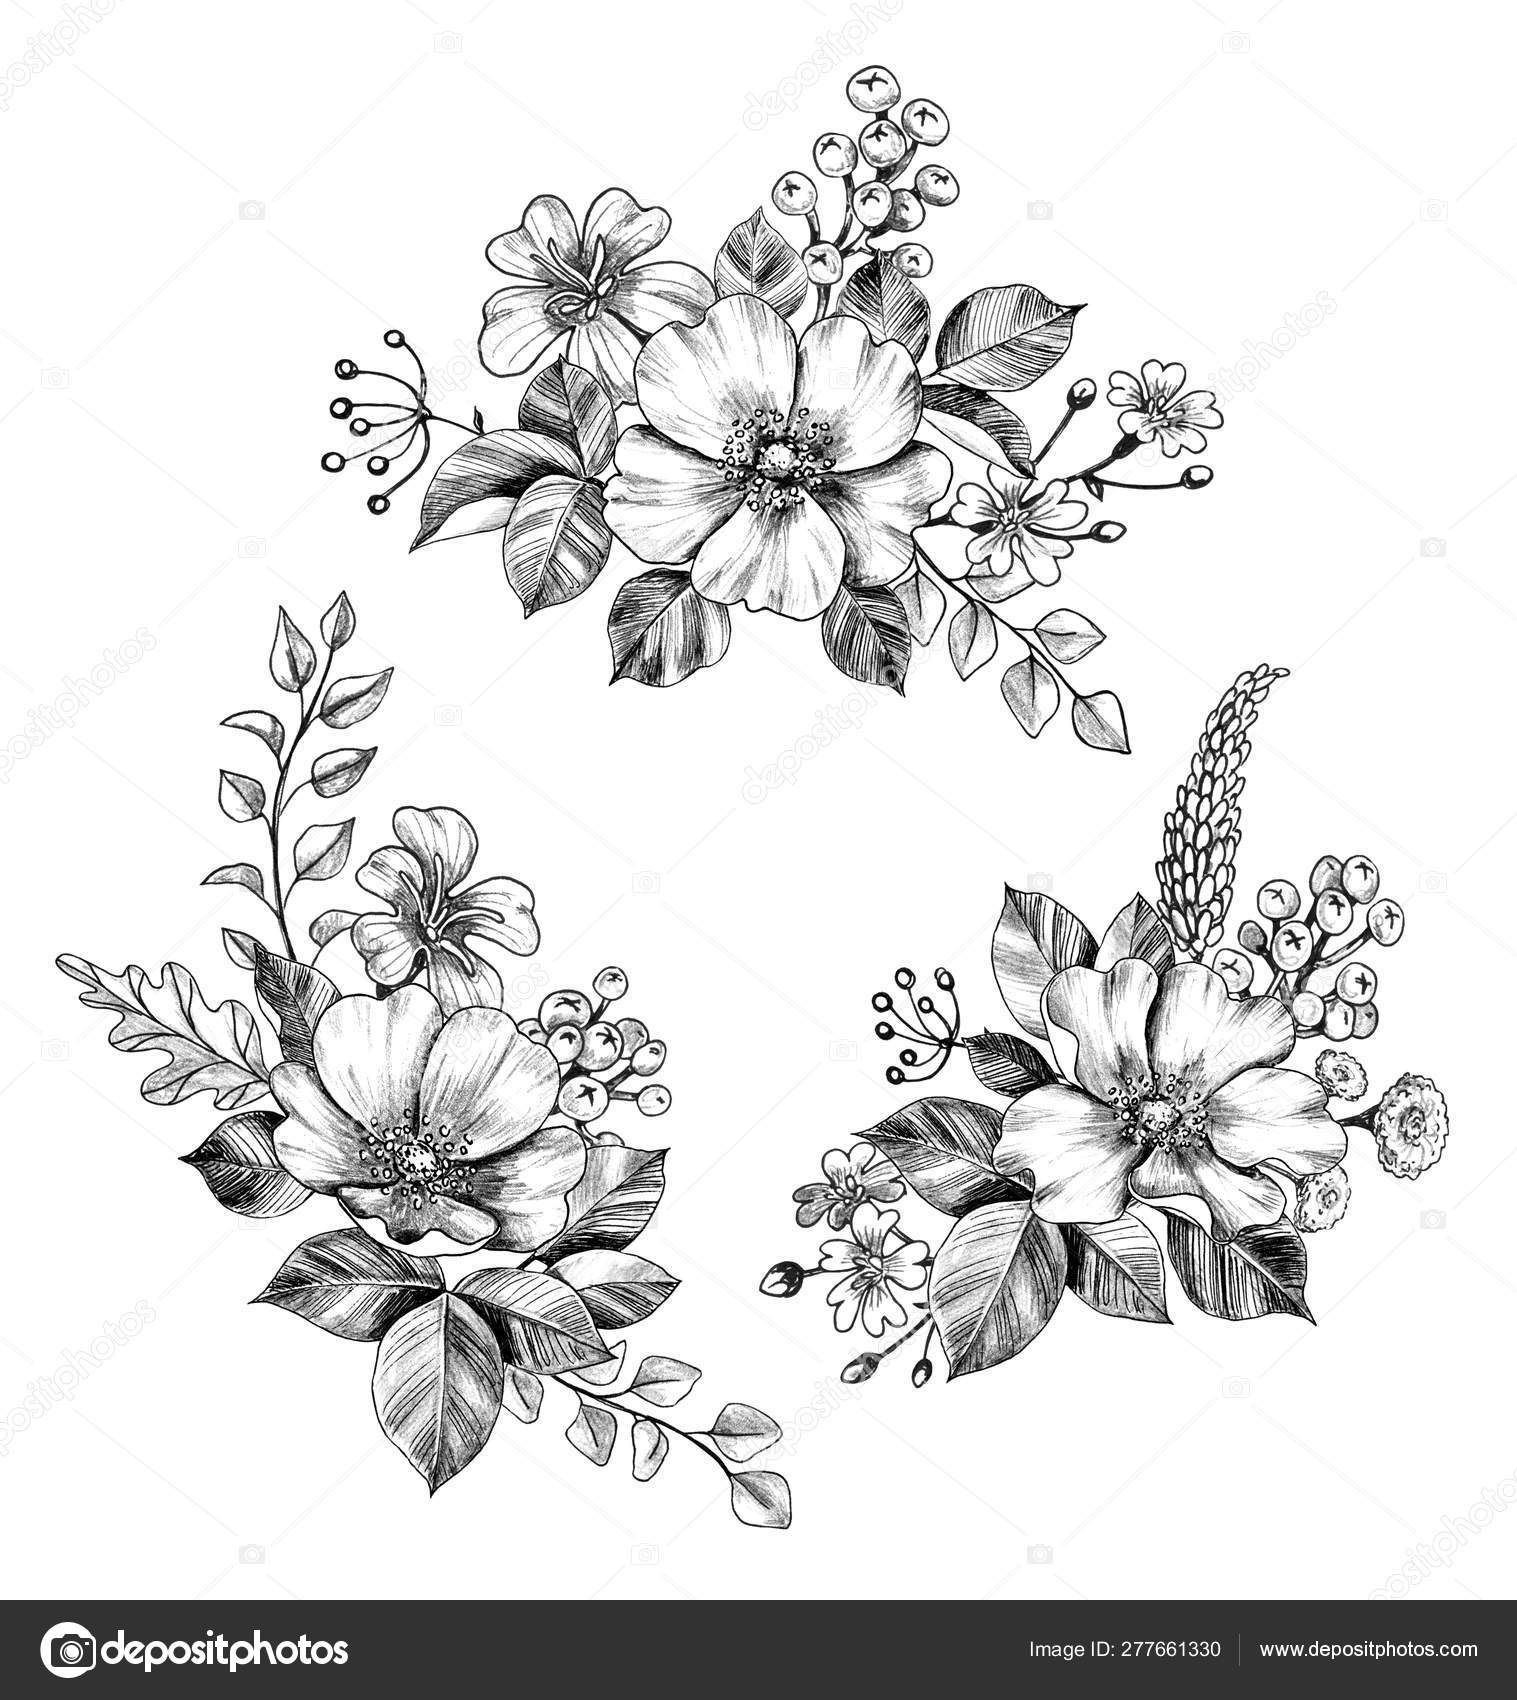 https://st4.depositphotos.com/2488555/27766/i/1600/depositphotos_277661330-stock-illustration-hand-drawn-flowers-bunches-set.jpg